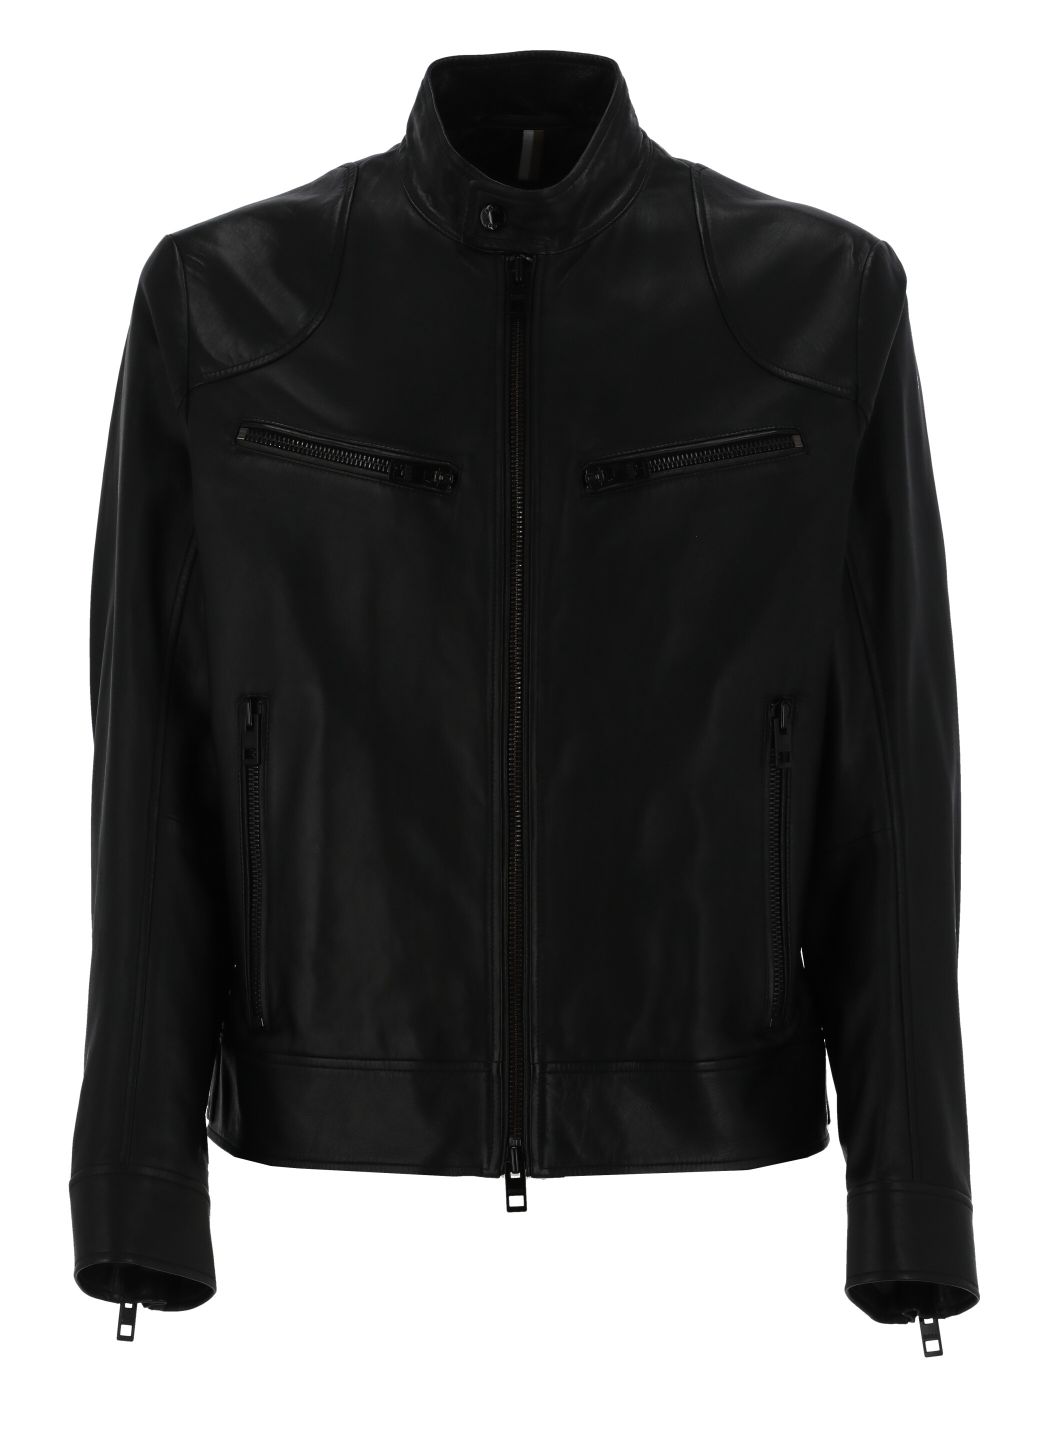 Malton leather jacket